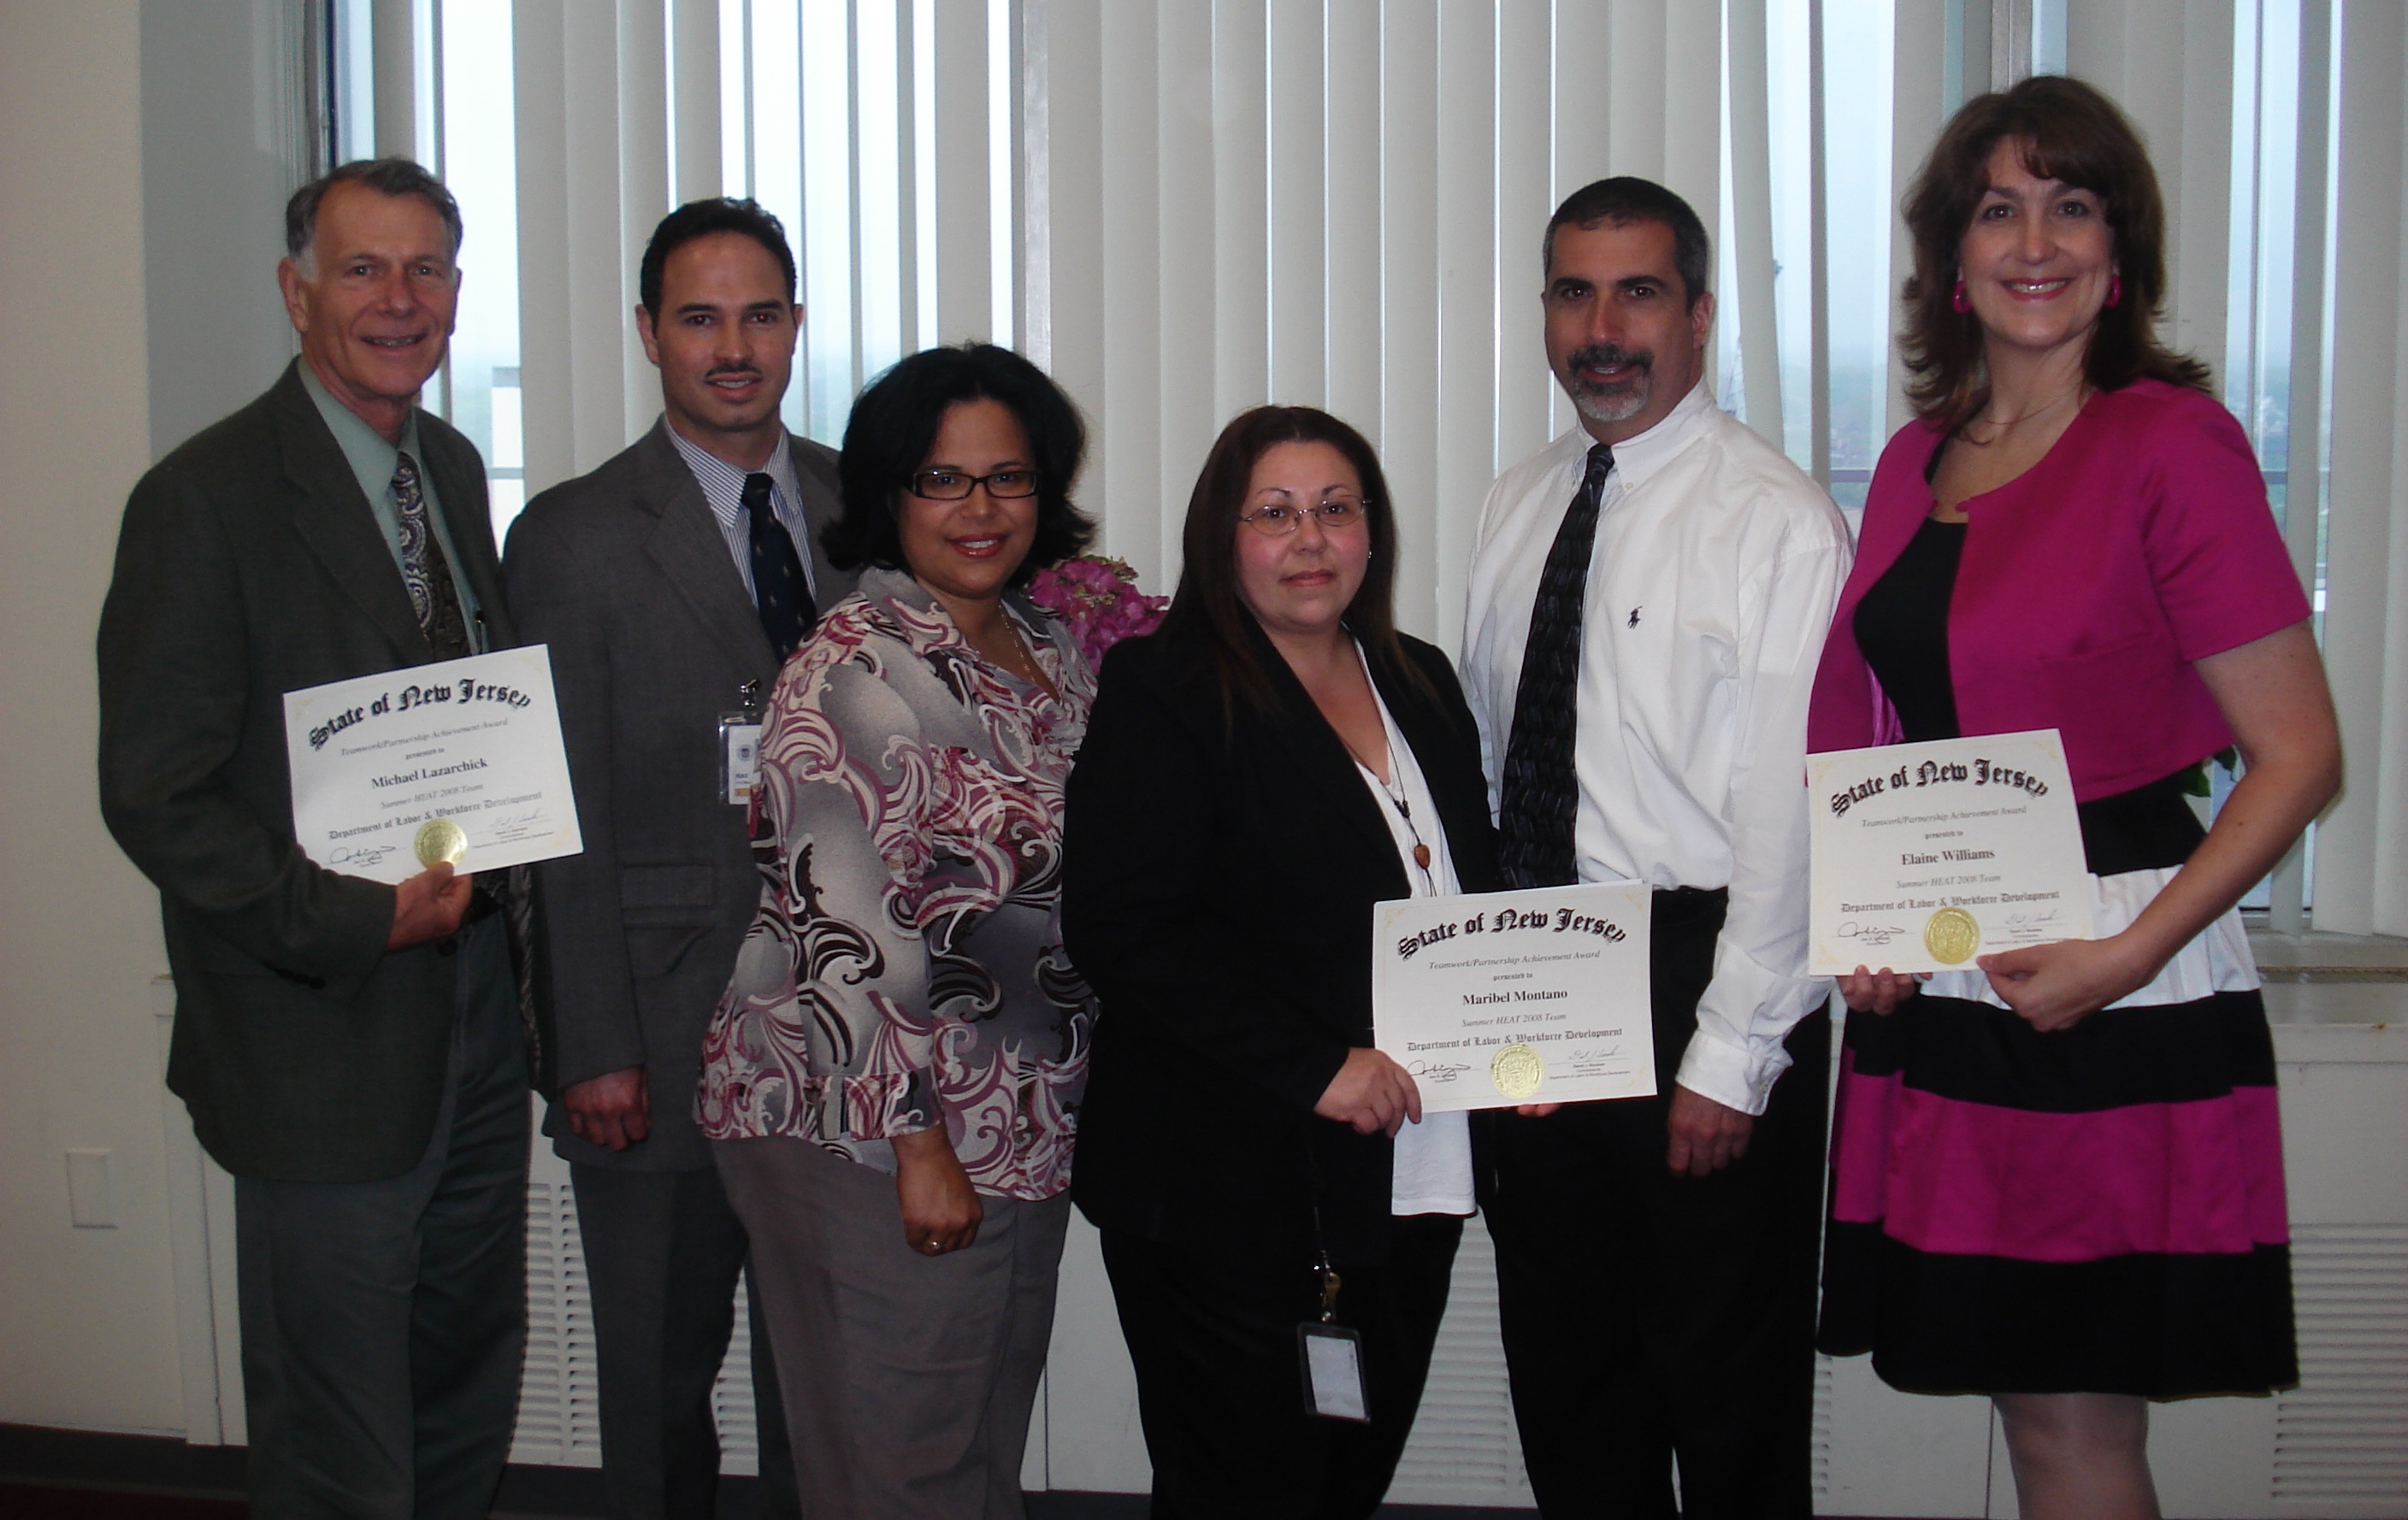 Receiving Teamwork/Partnership Achievement Award from State of New Jersey